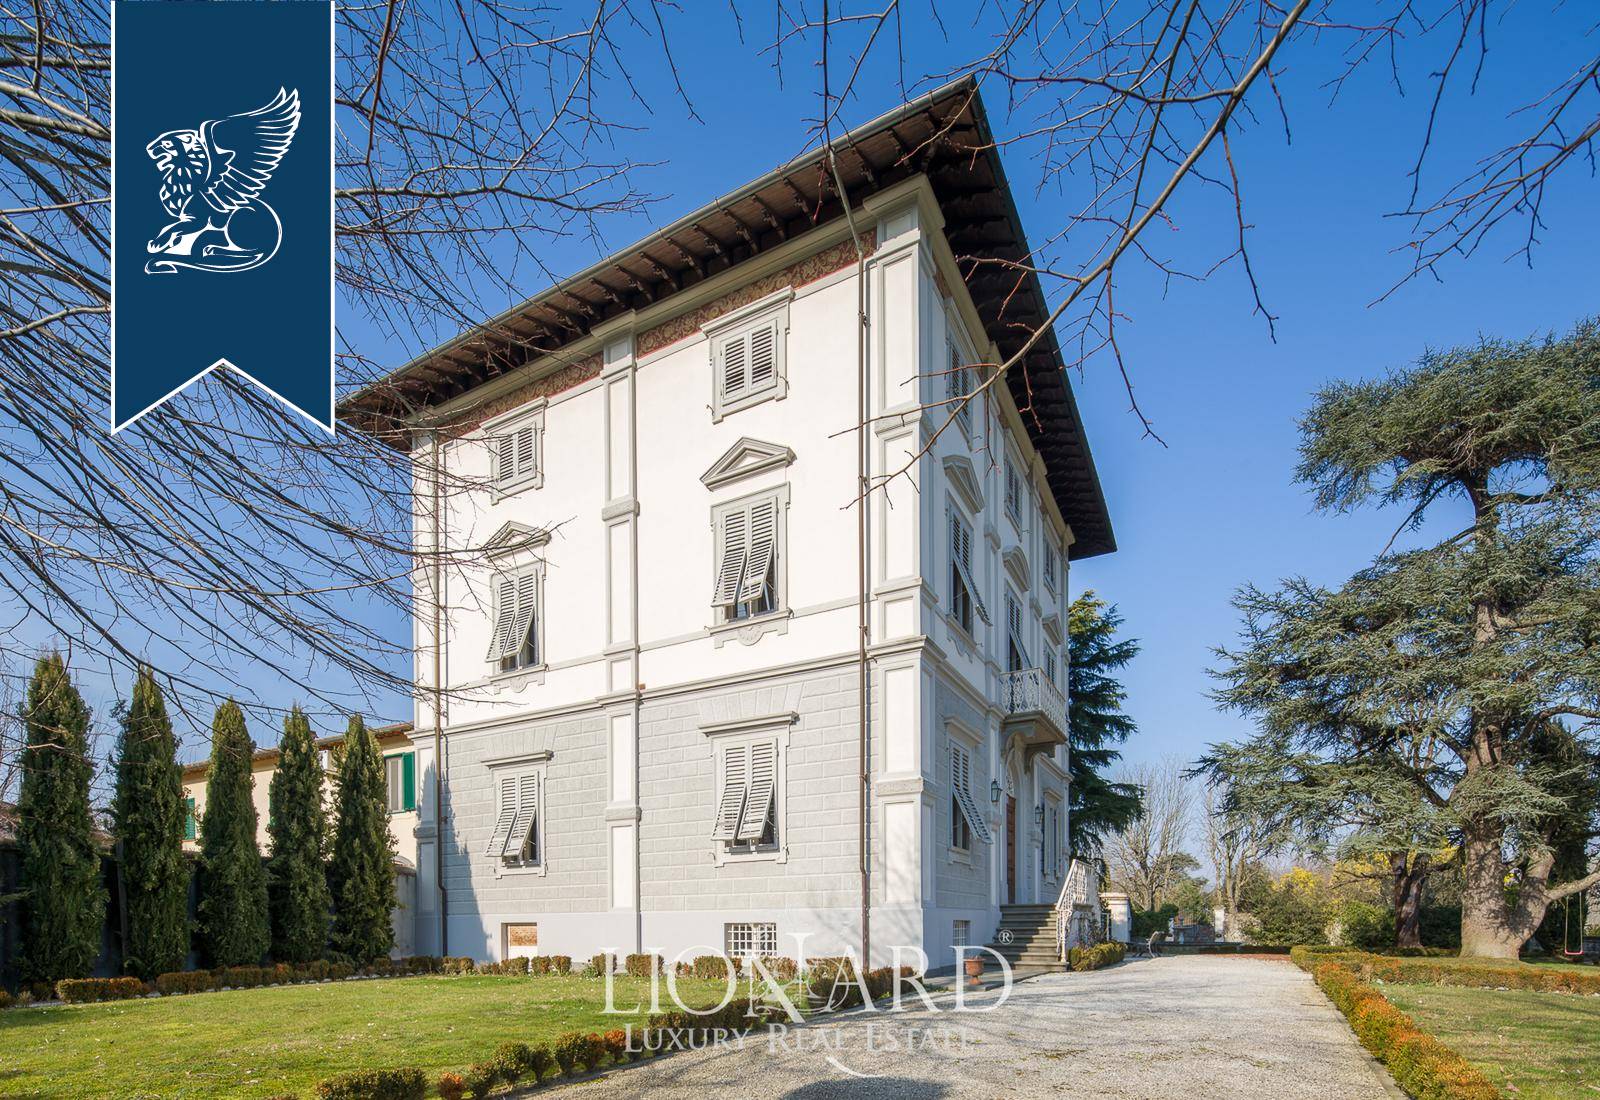 Villa in Vendita a Lucca: 0 locali, 770 mq - Foto 6